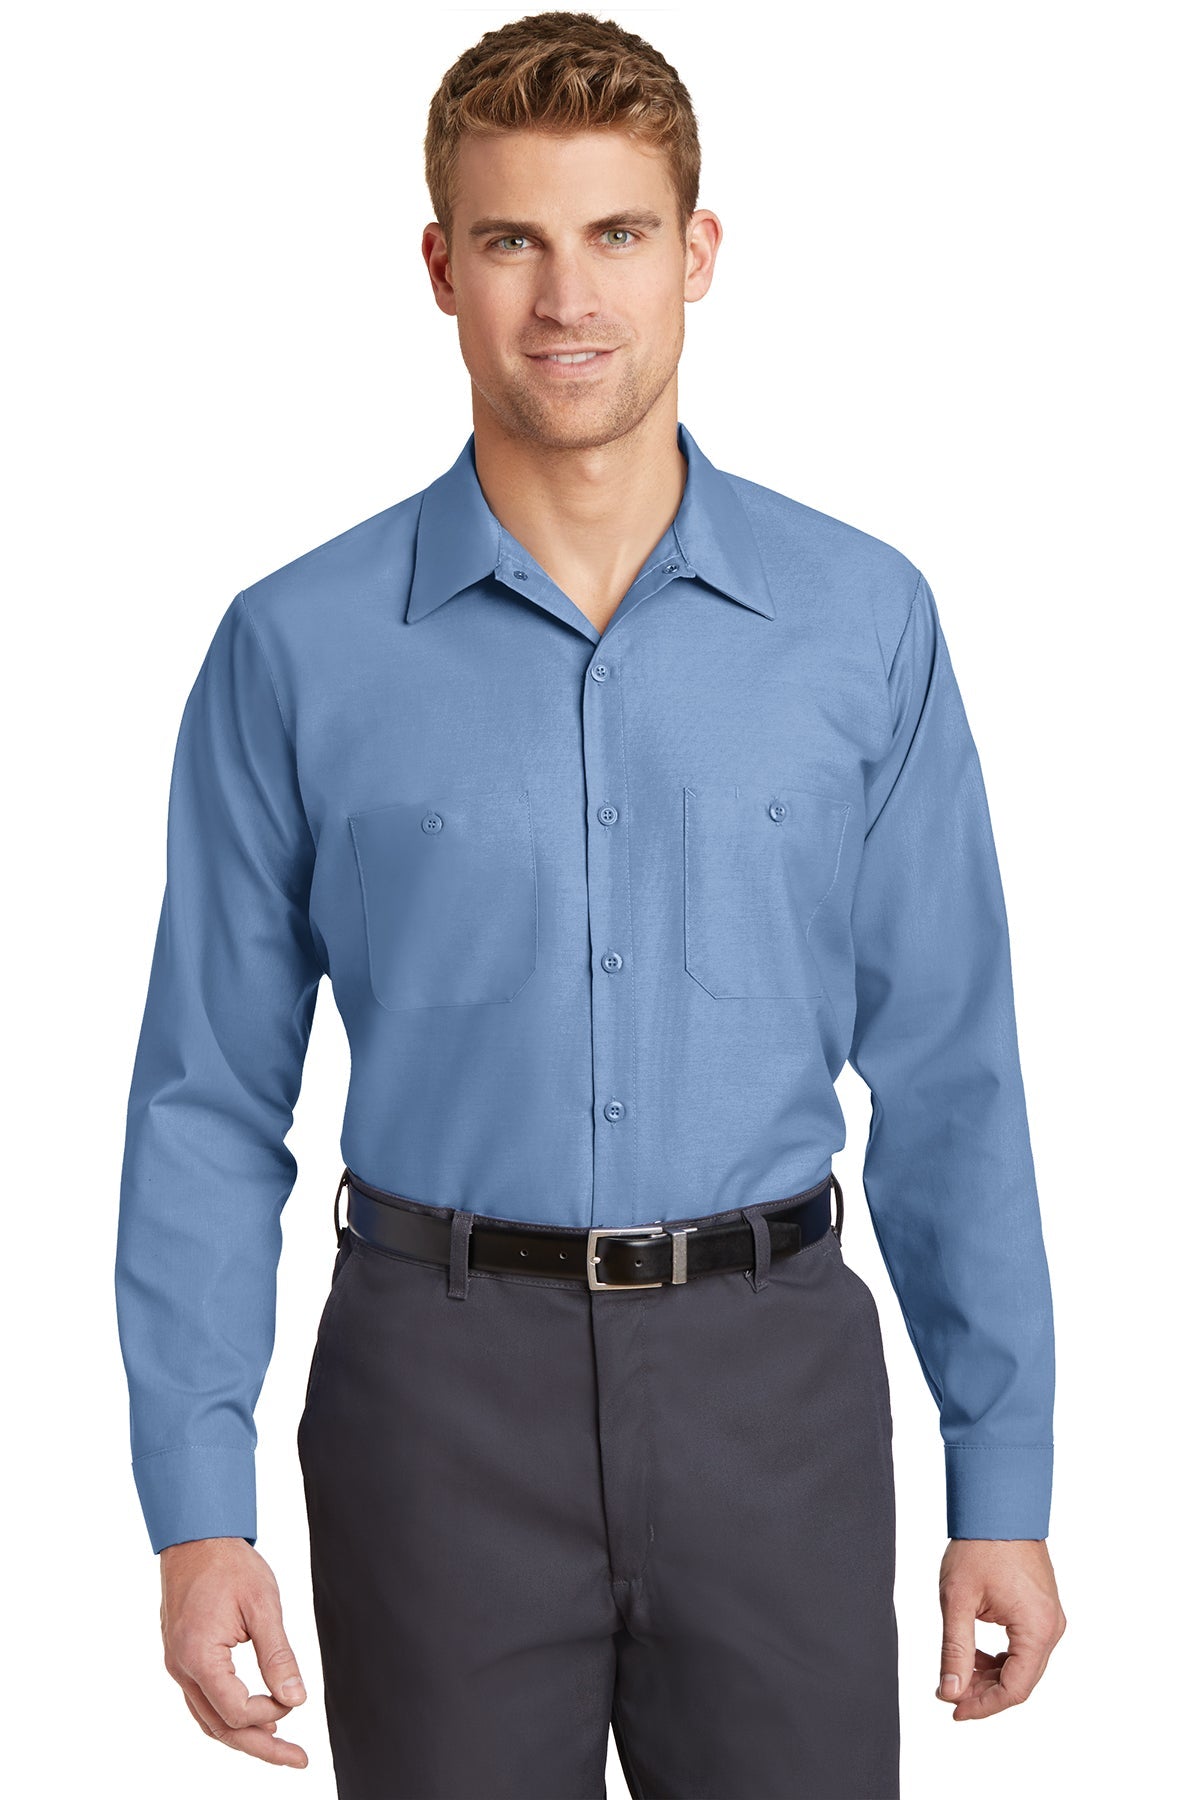 SP14LONG Red Kap® Long Size, Long Sleeve Industrial Work Shirt